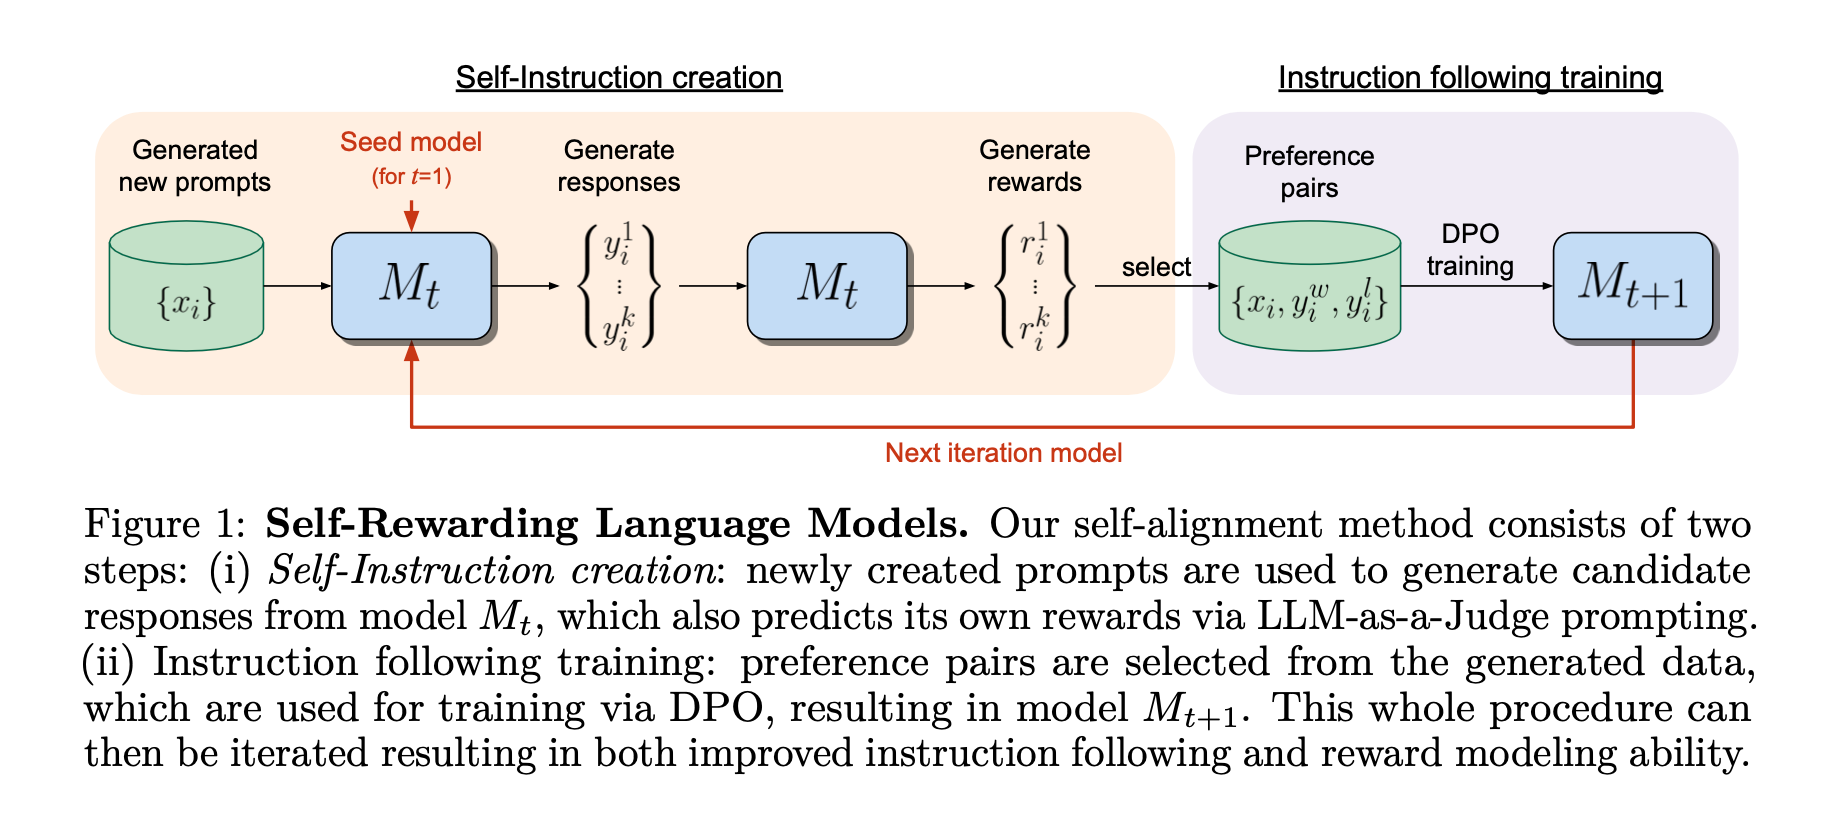 How to train Mistral 7B as a "Self-Rewarding Language Model"